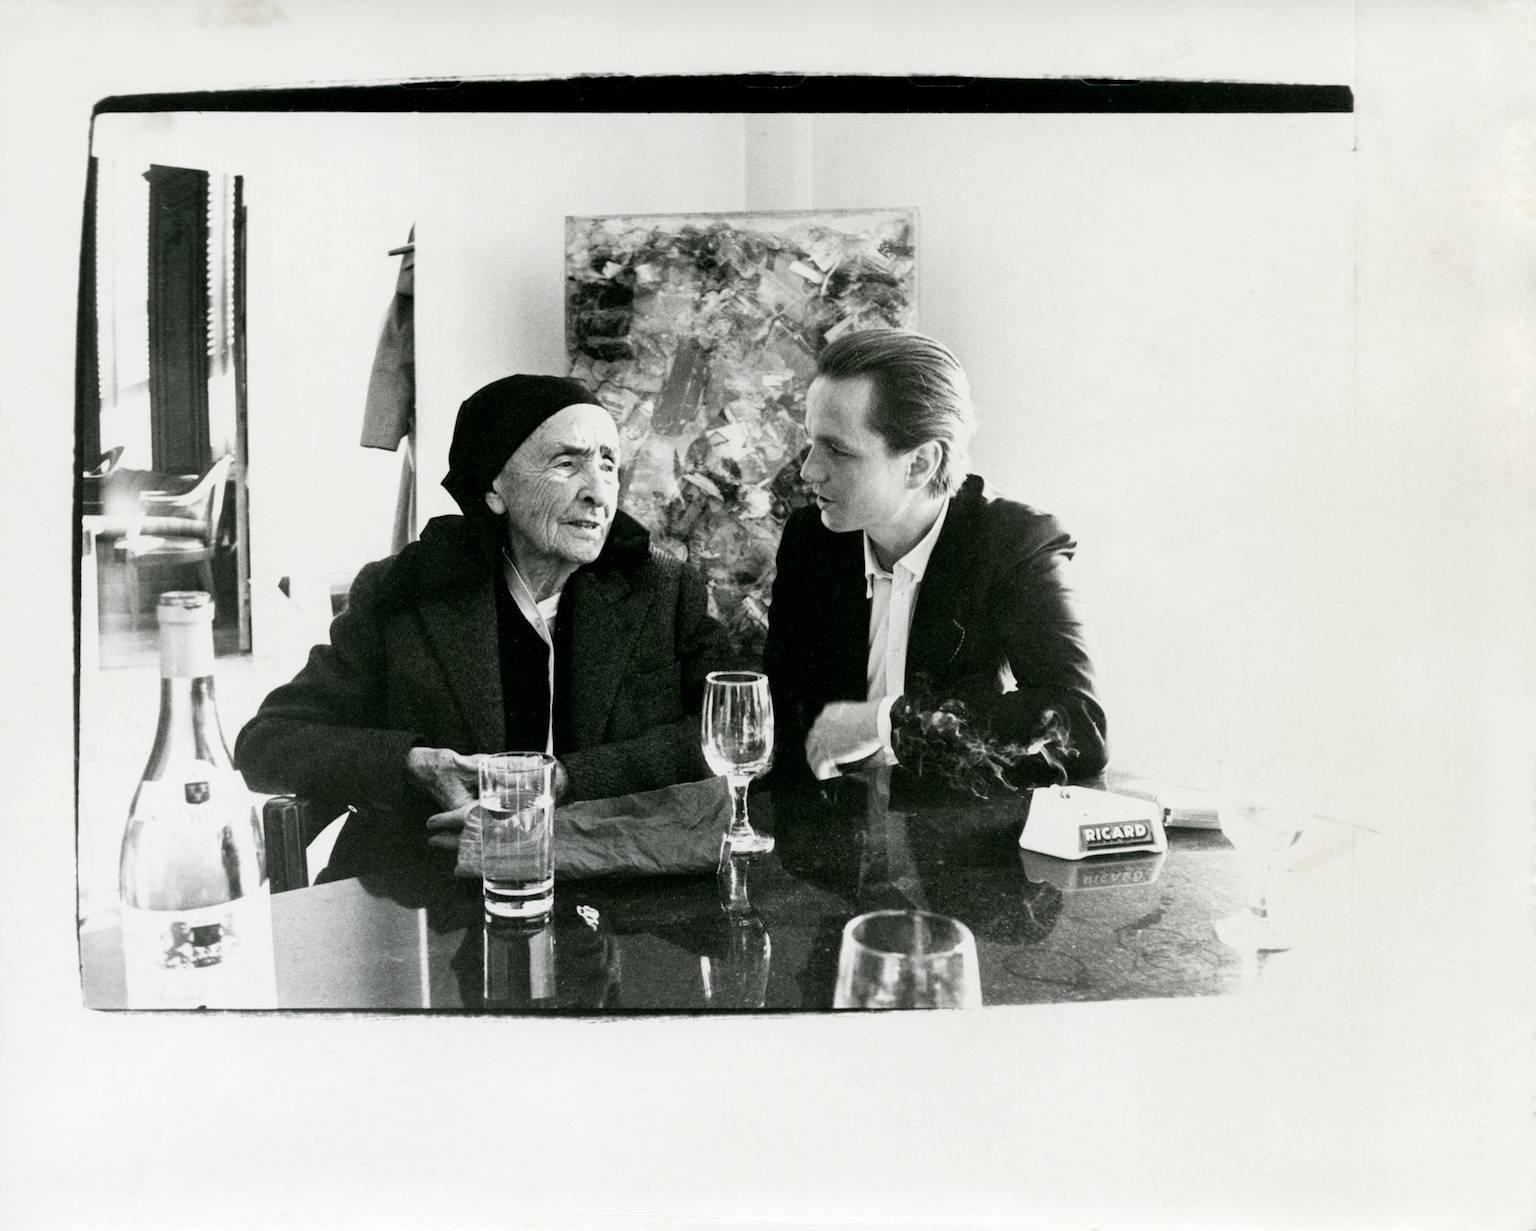 Photograph of Georgia O'Keeffe and Juan Usle